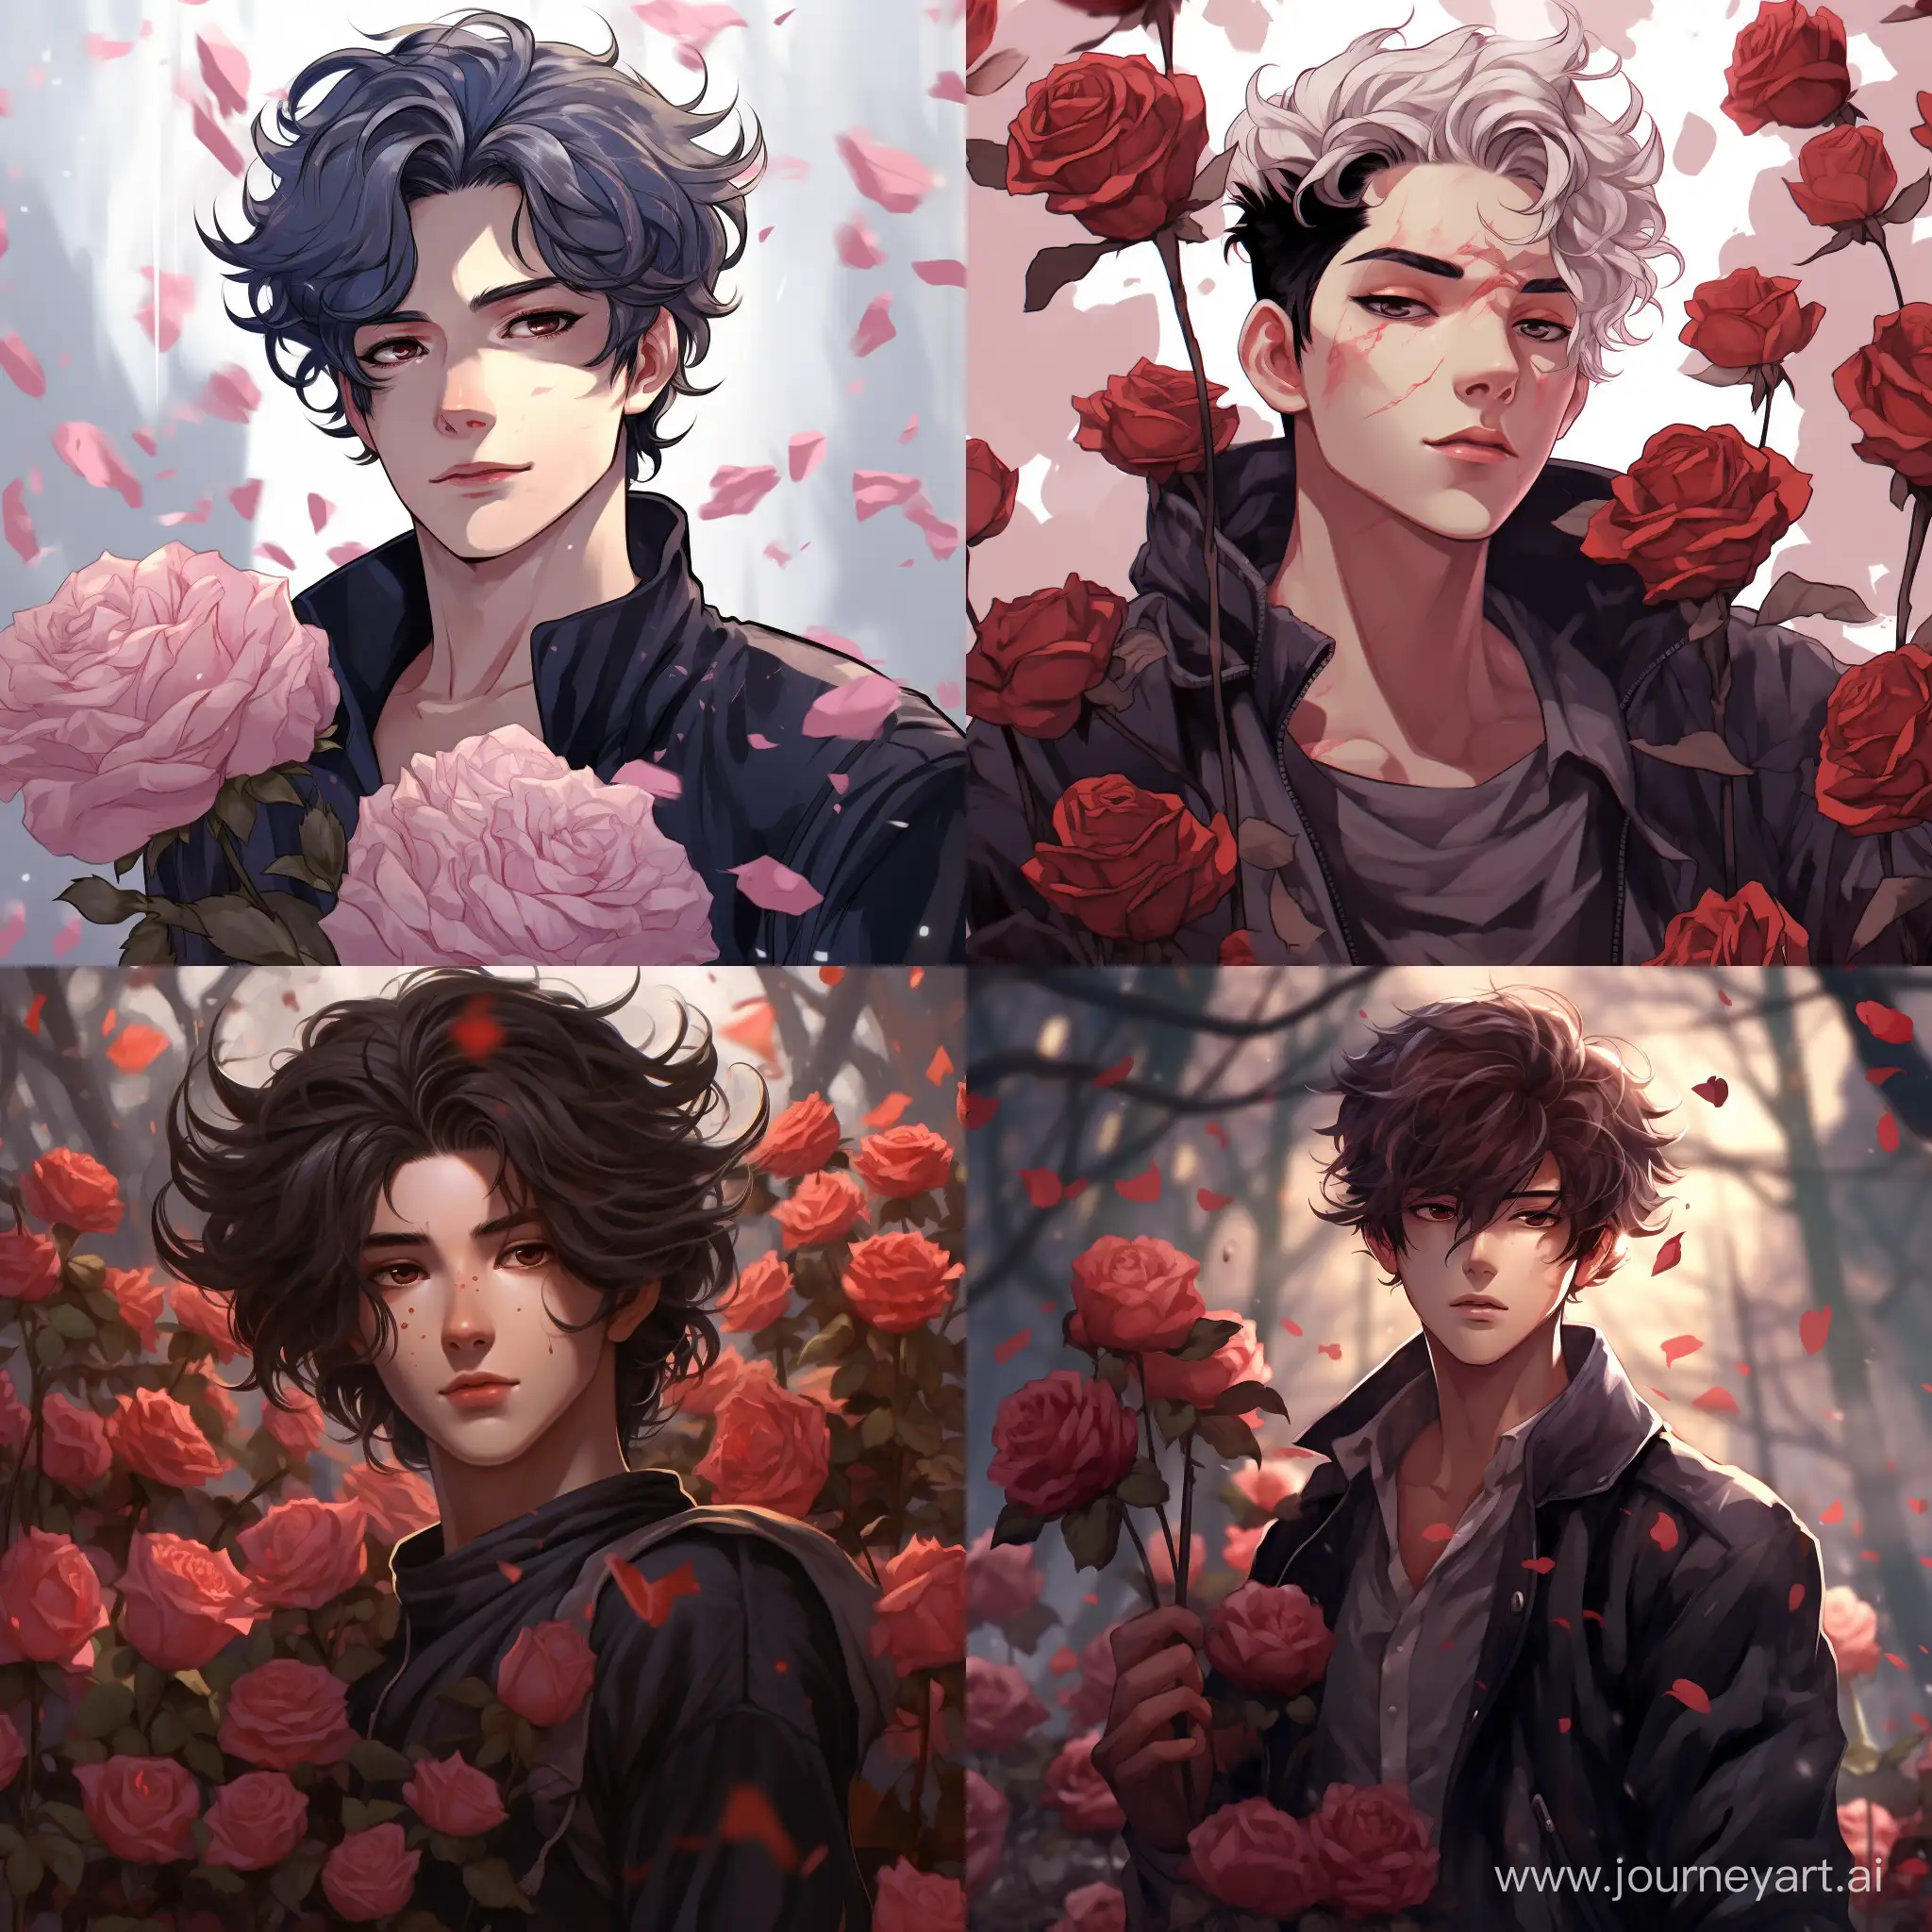 Romantic-Manga-Anime-Guy-Surrounded-by-Roses